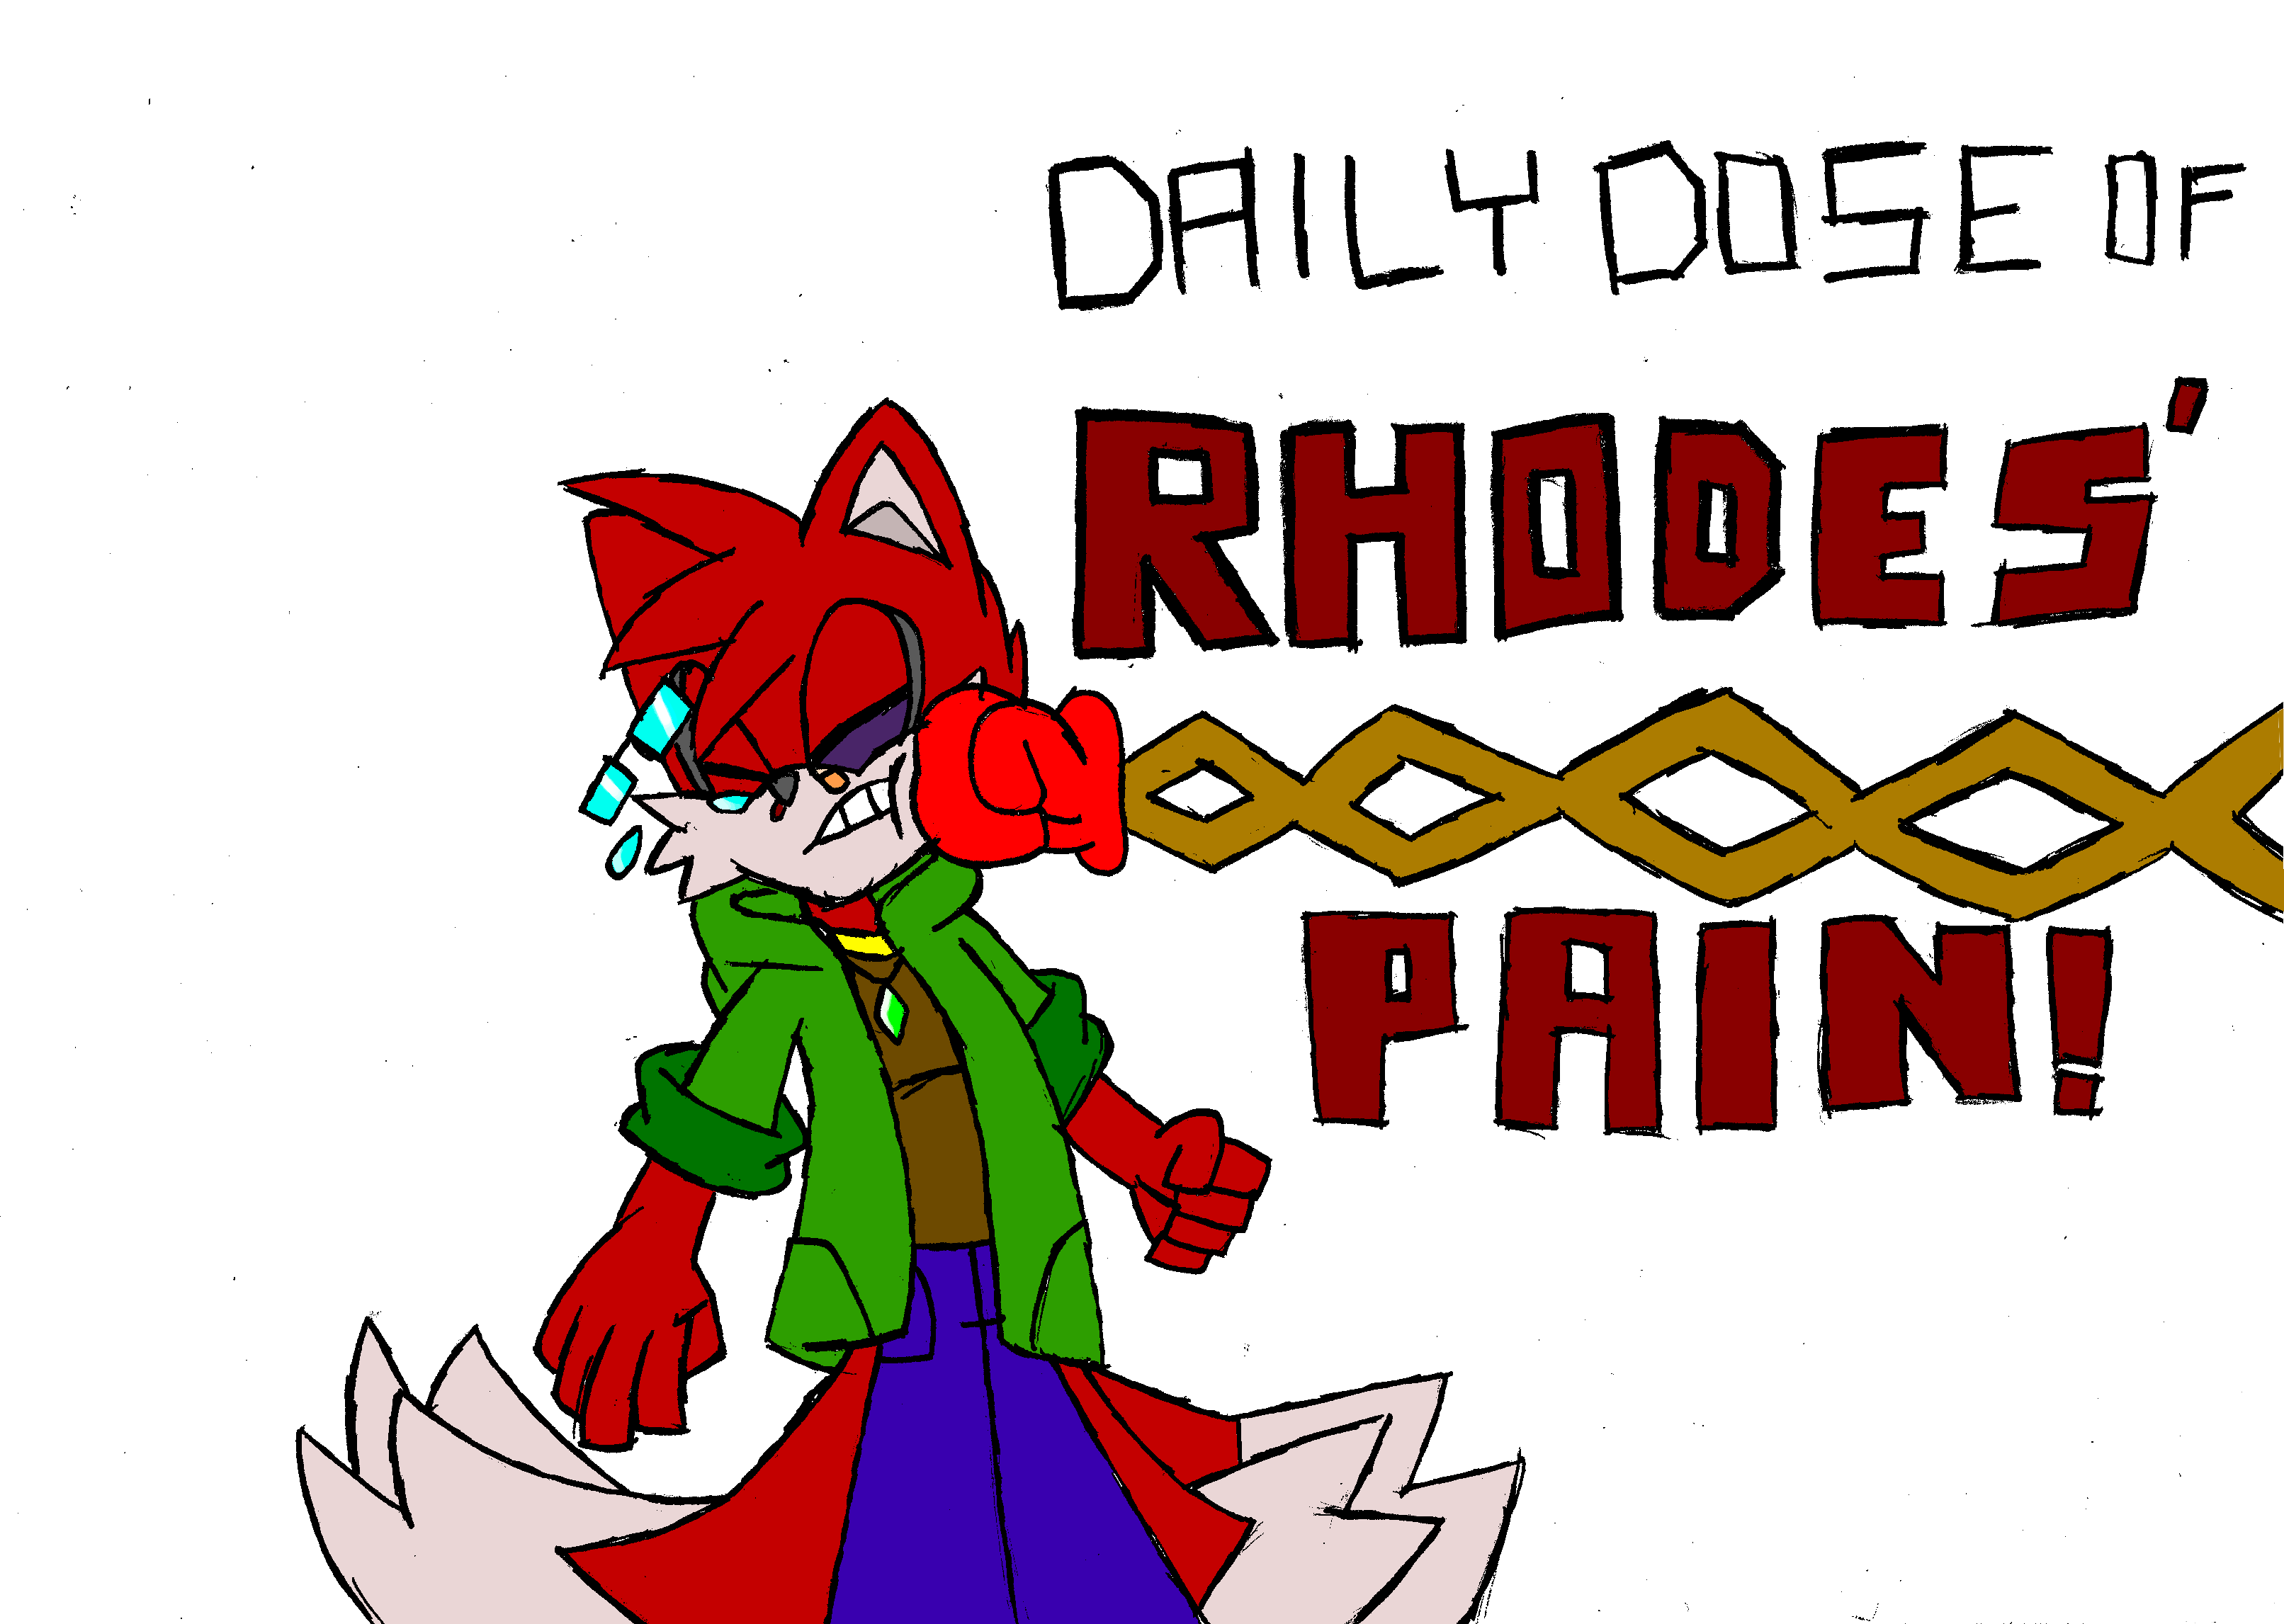 Rhodes' pain